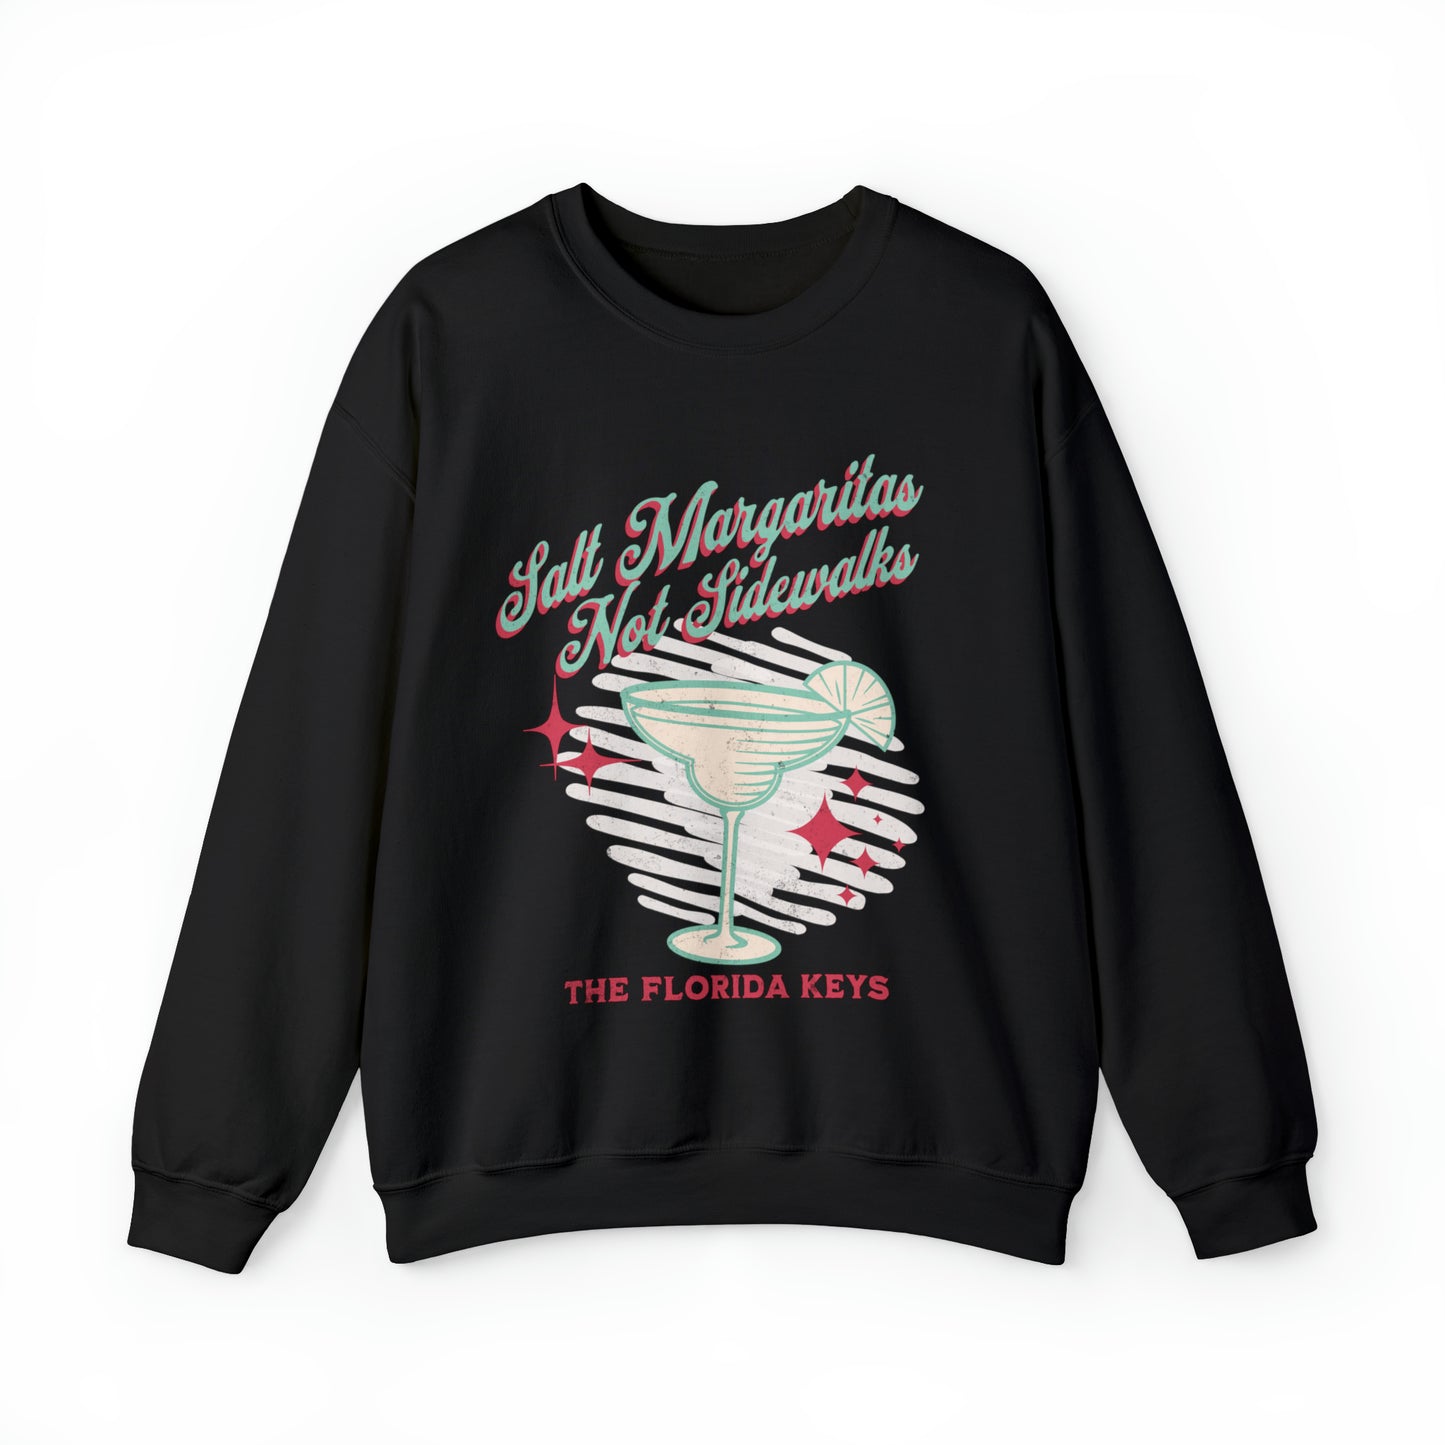 Salt Margaritas - Not Sidewalks Christmas Sweatshirt for the Florida Keys  - Florida sweatshirt - beach sweatshirt